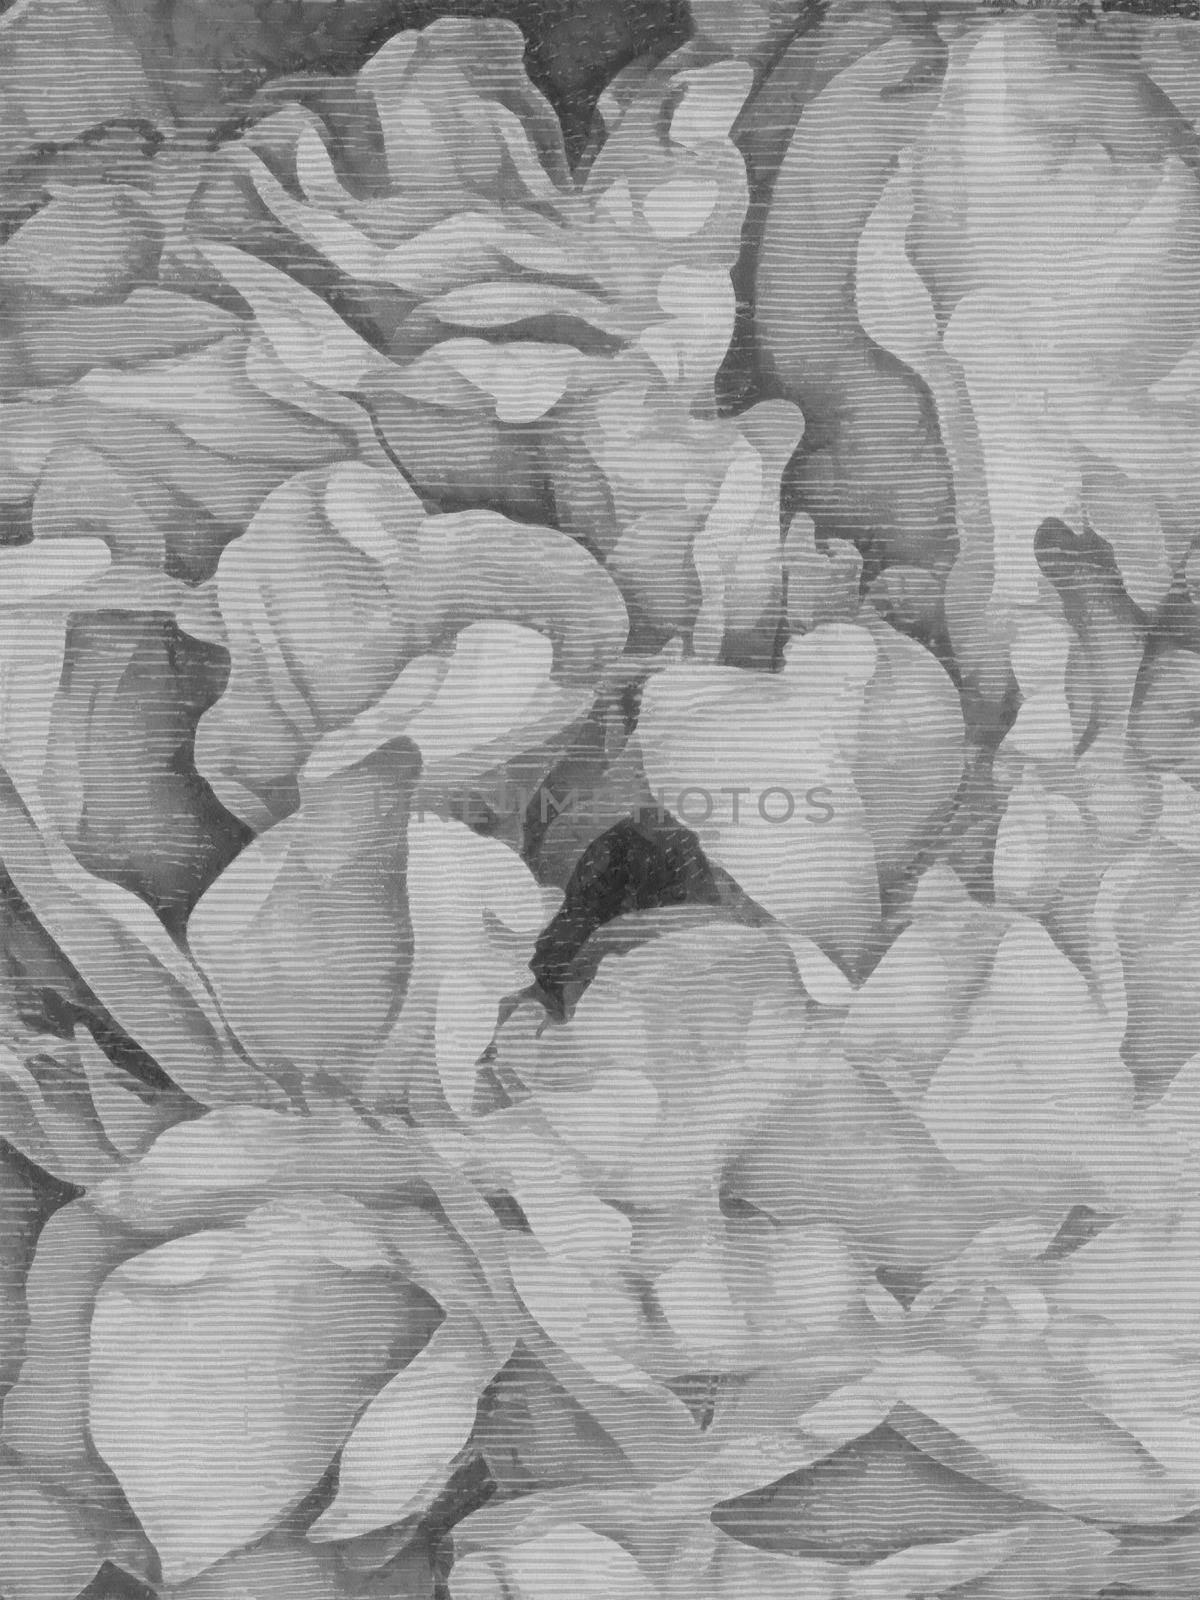 Flowers petals abstract. 3D rendering